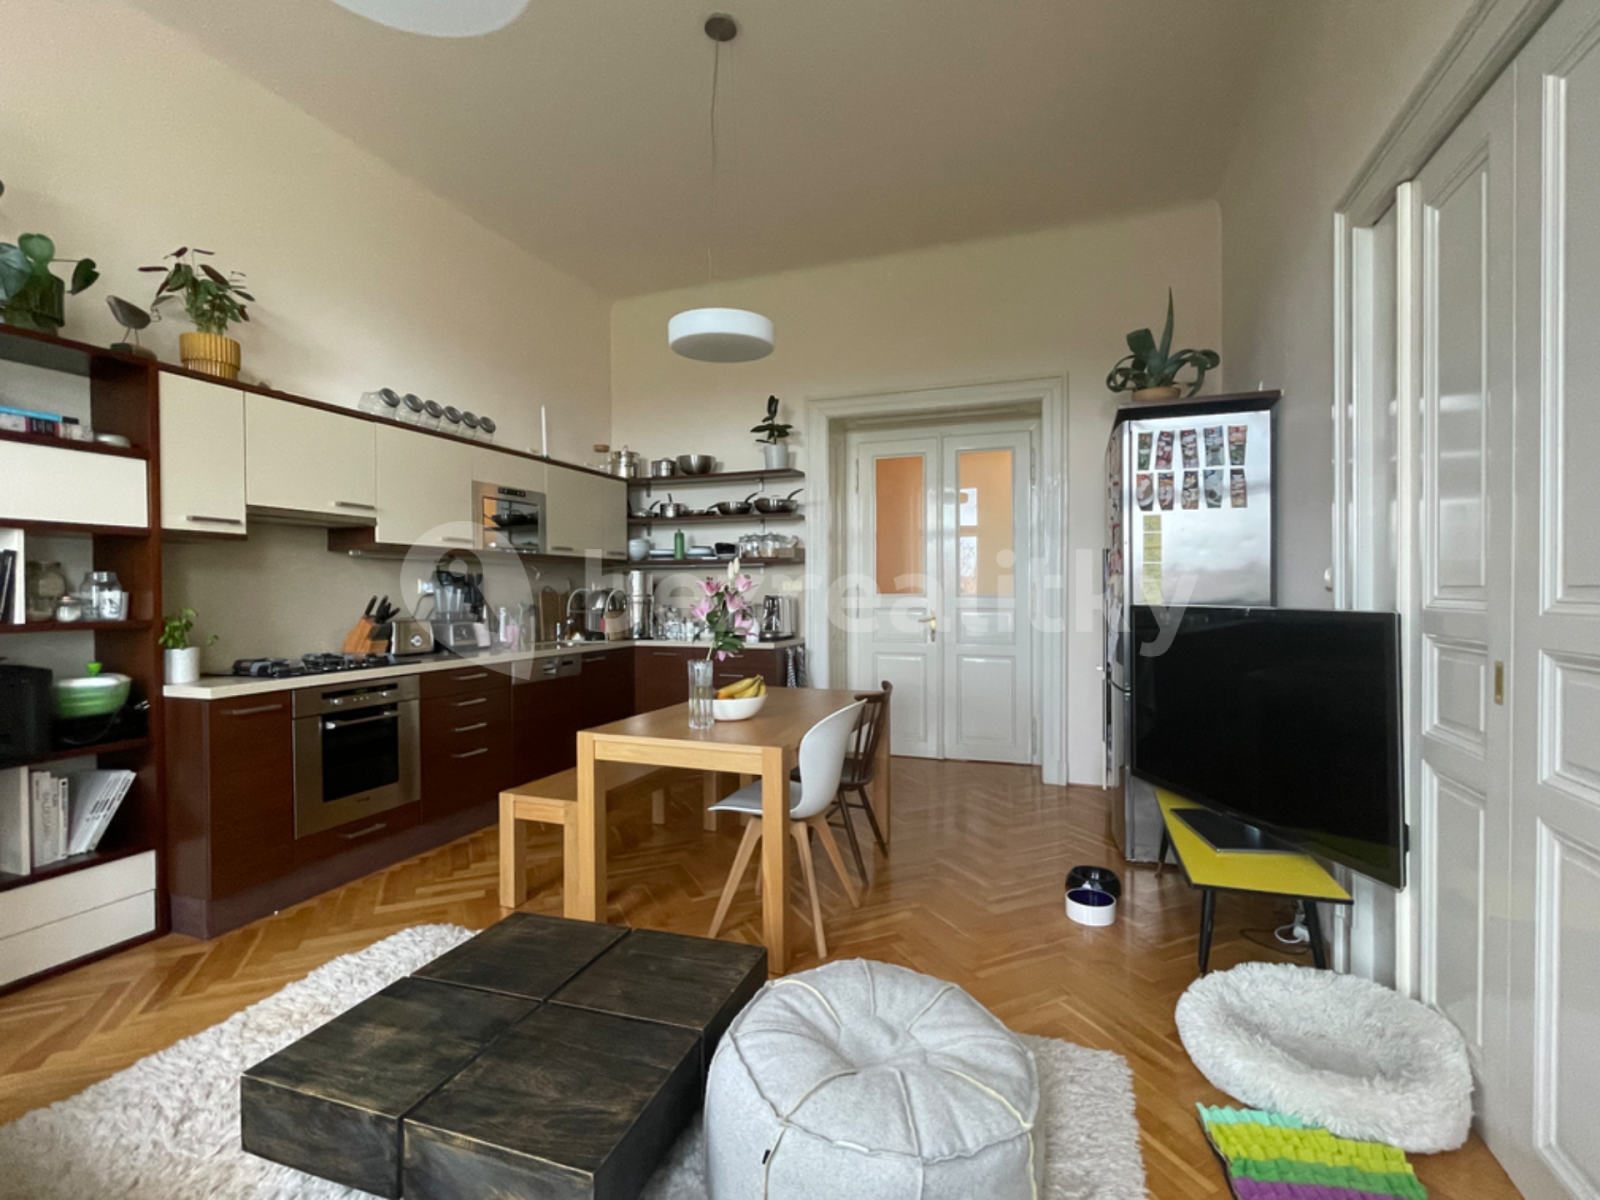 2 bedroom with open-plan kitchen flat to rent, 87 m², Slovenská, Prague, Prague